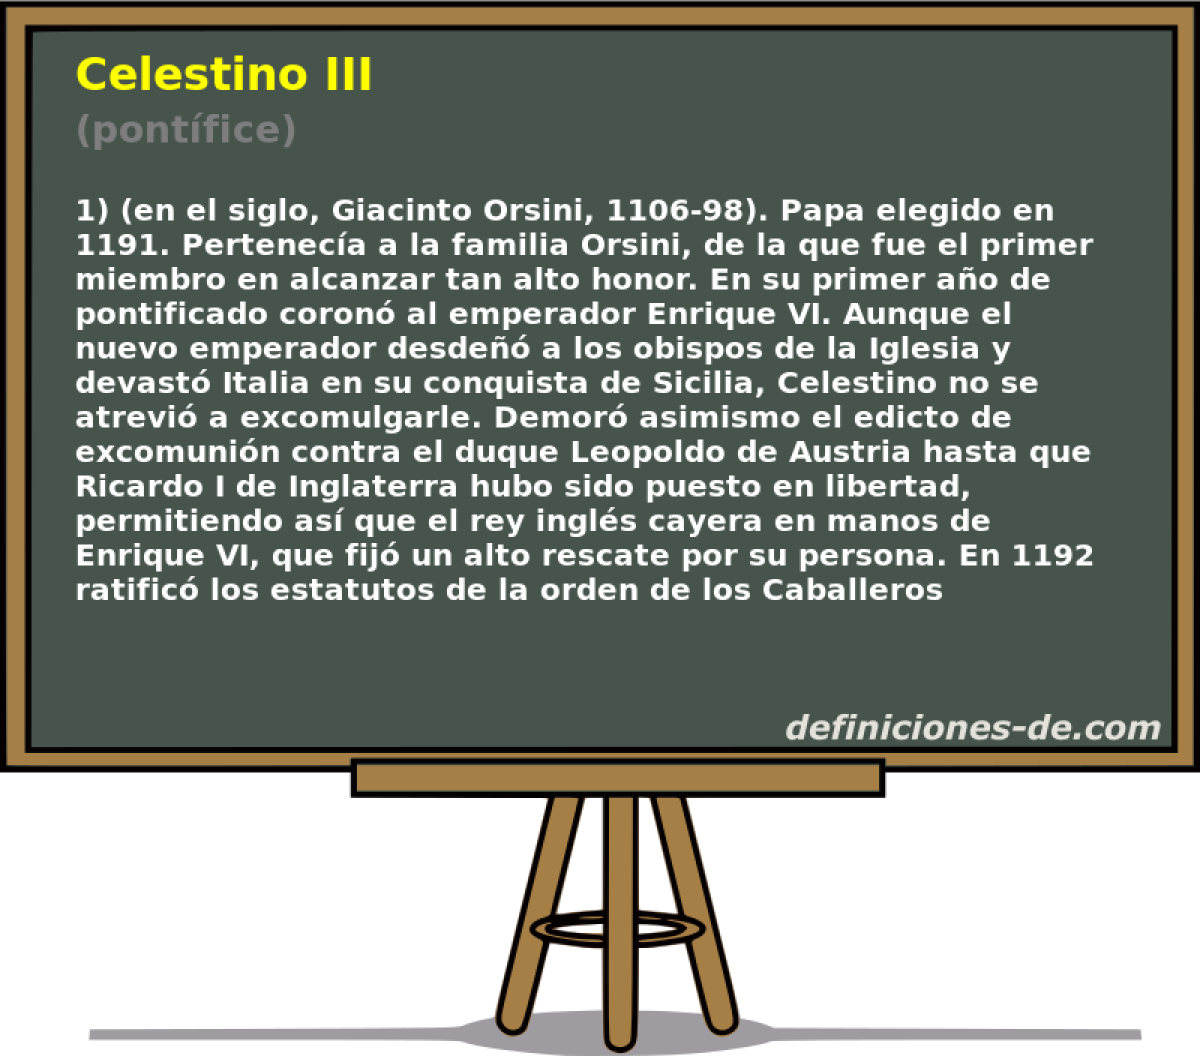 Celestino III (pontfice)